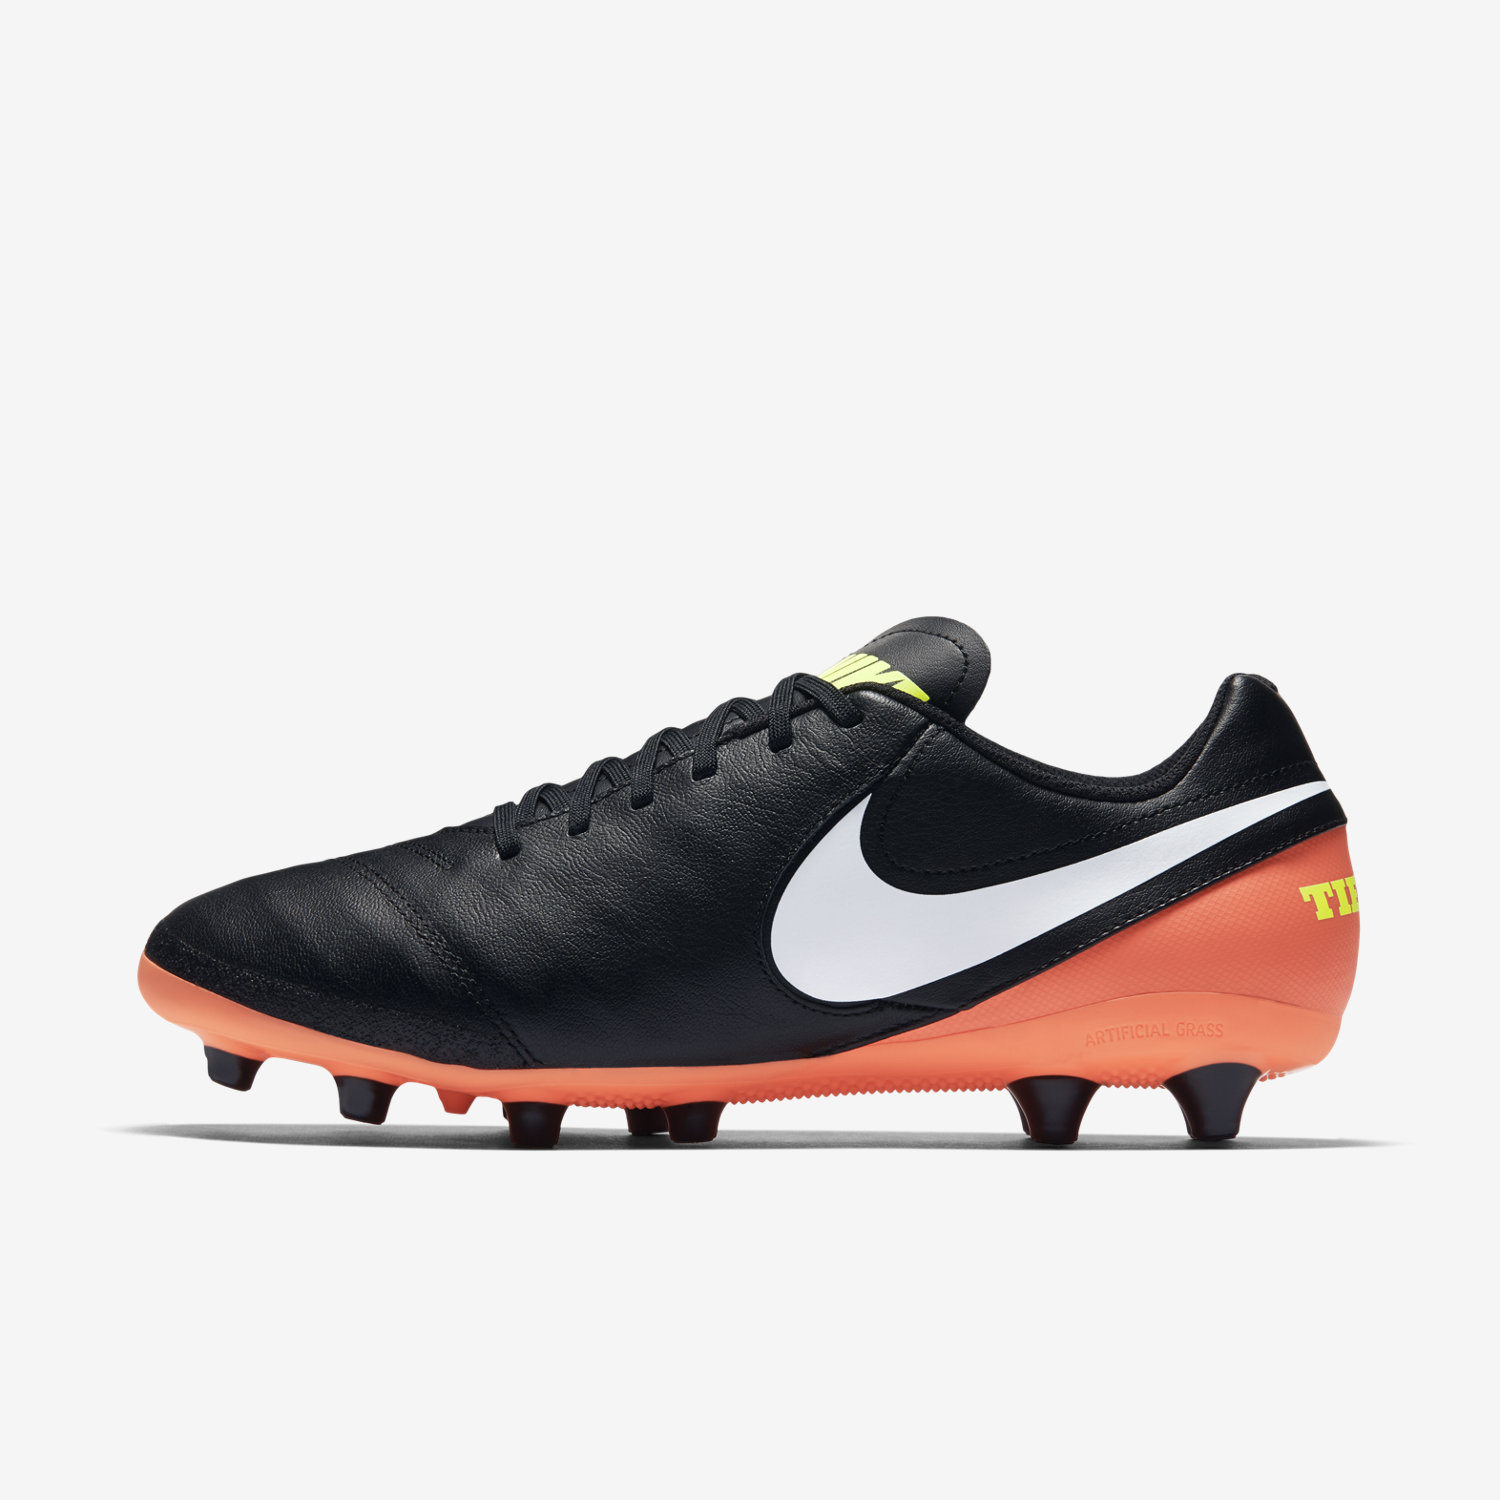 Nike Tiempo Genio II Leather AG-PRO - Men's Artificial-Grass Football Boot